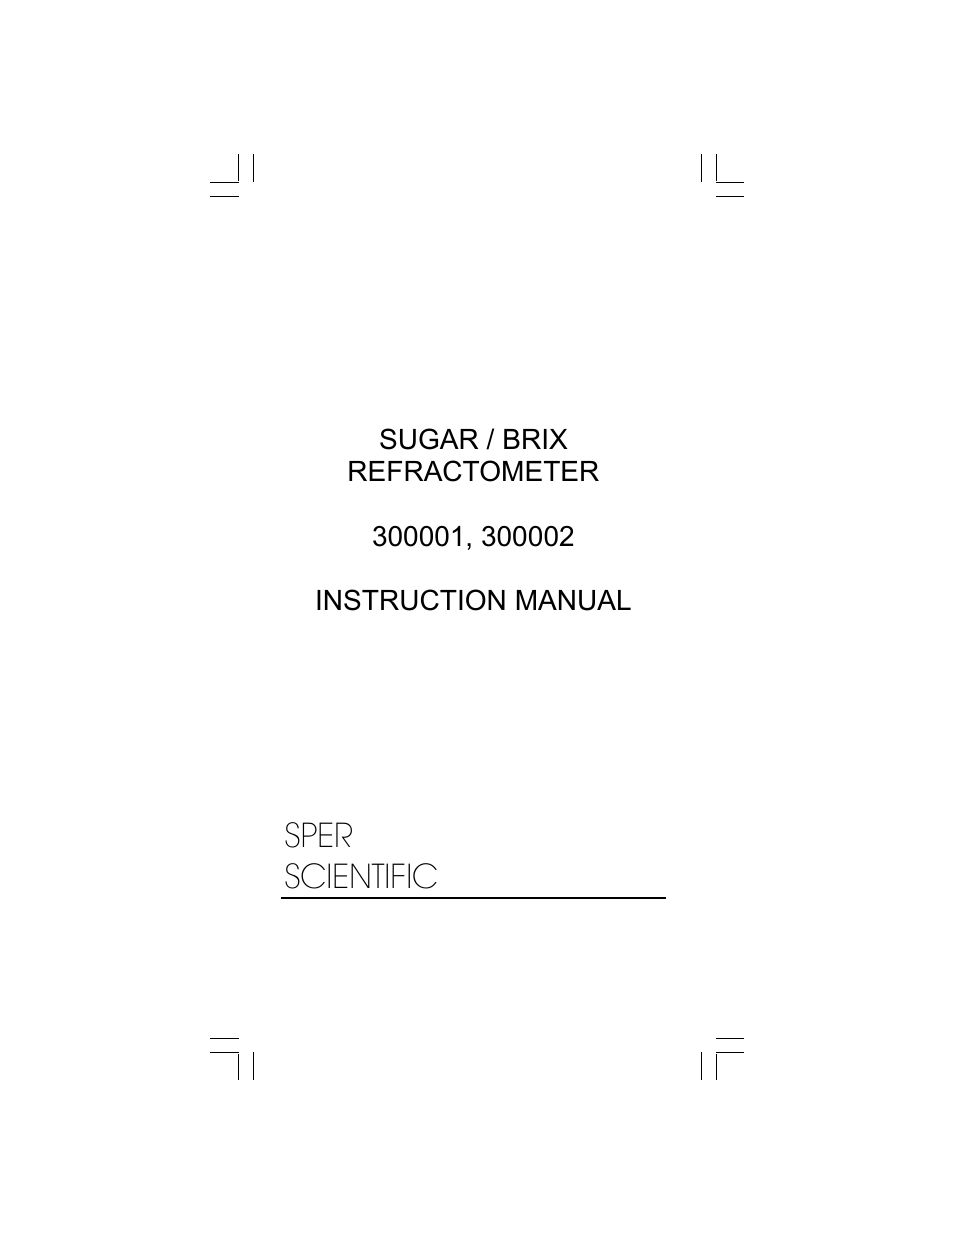 300001 Refractometer - Sugar Brix 0-32%